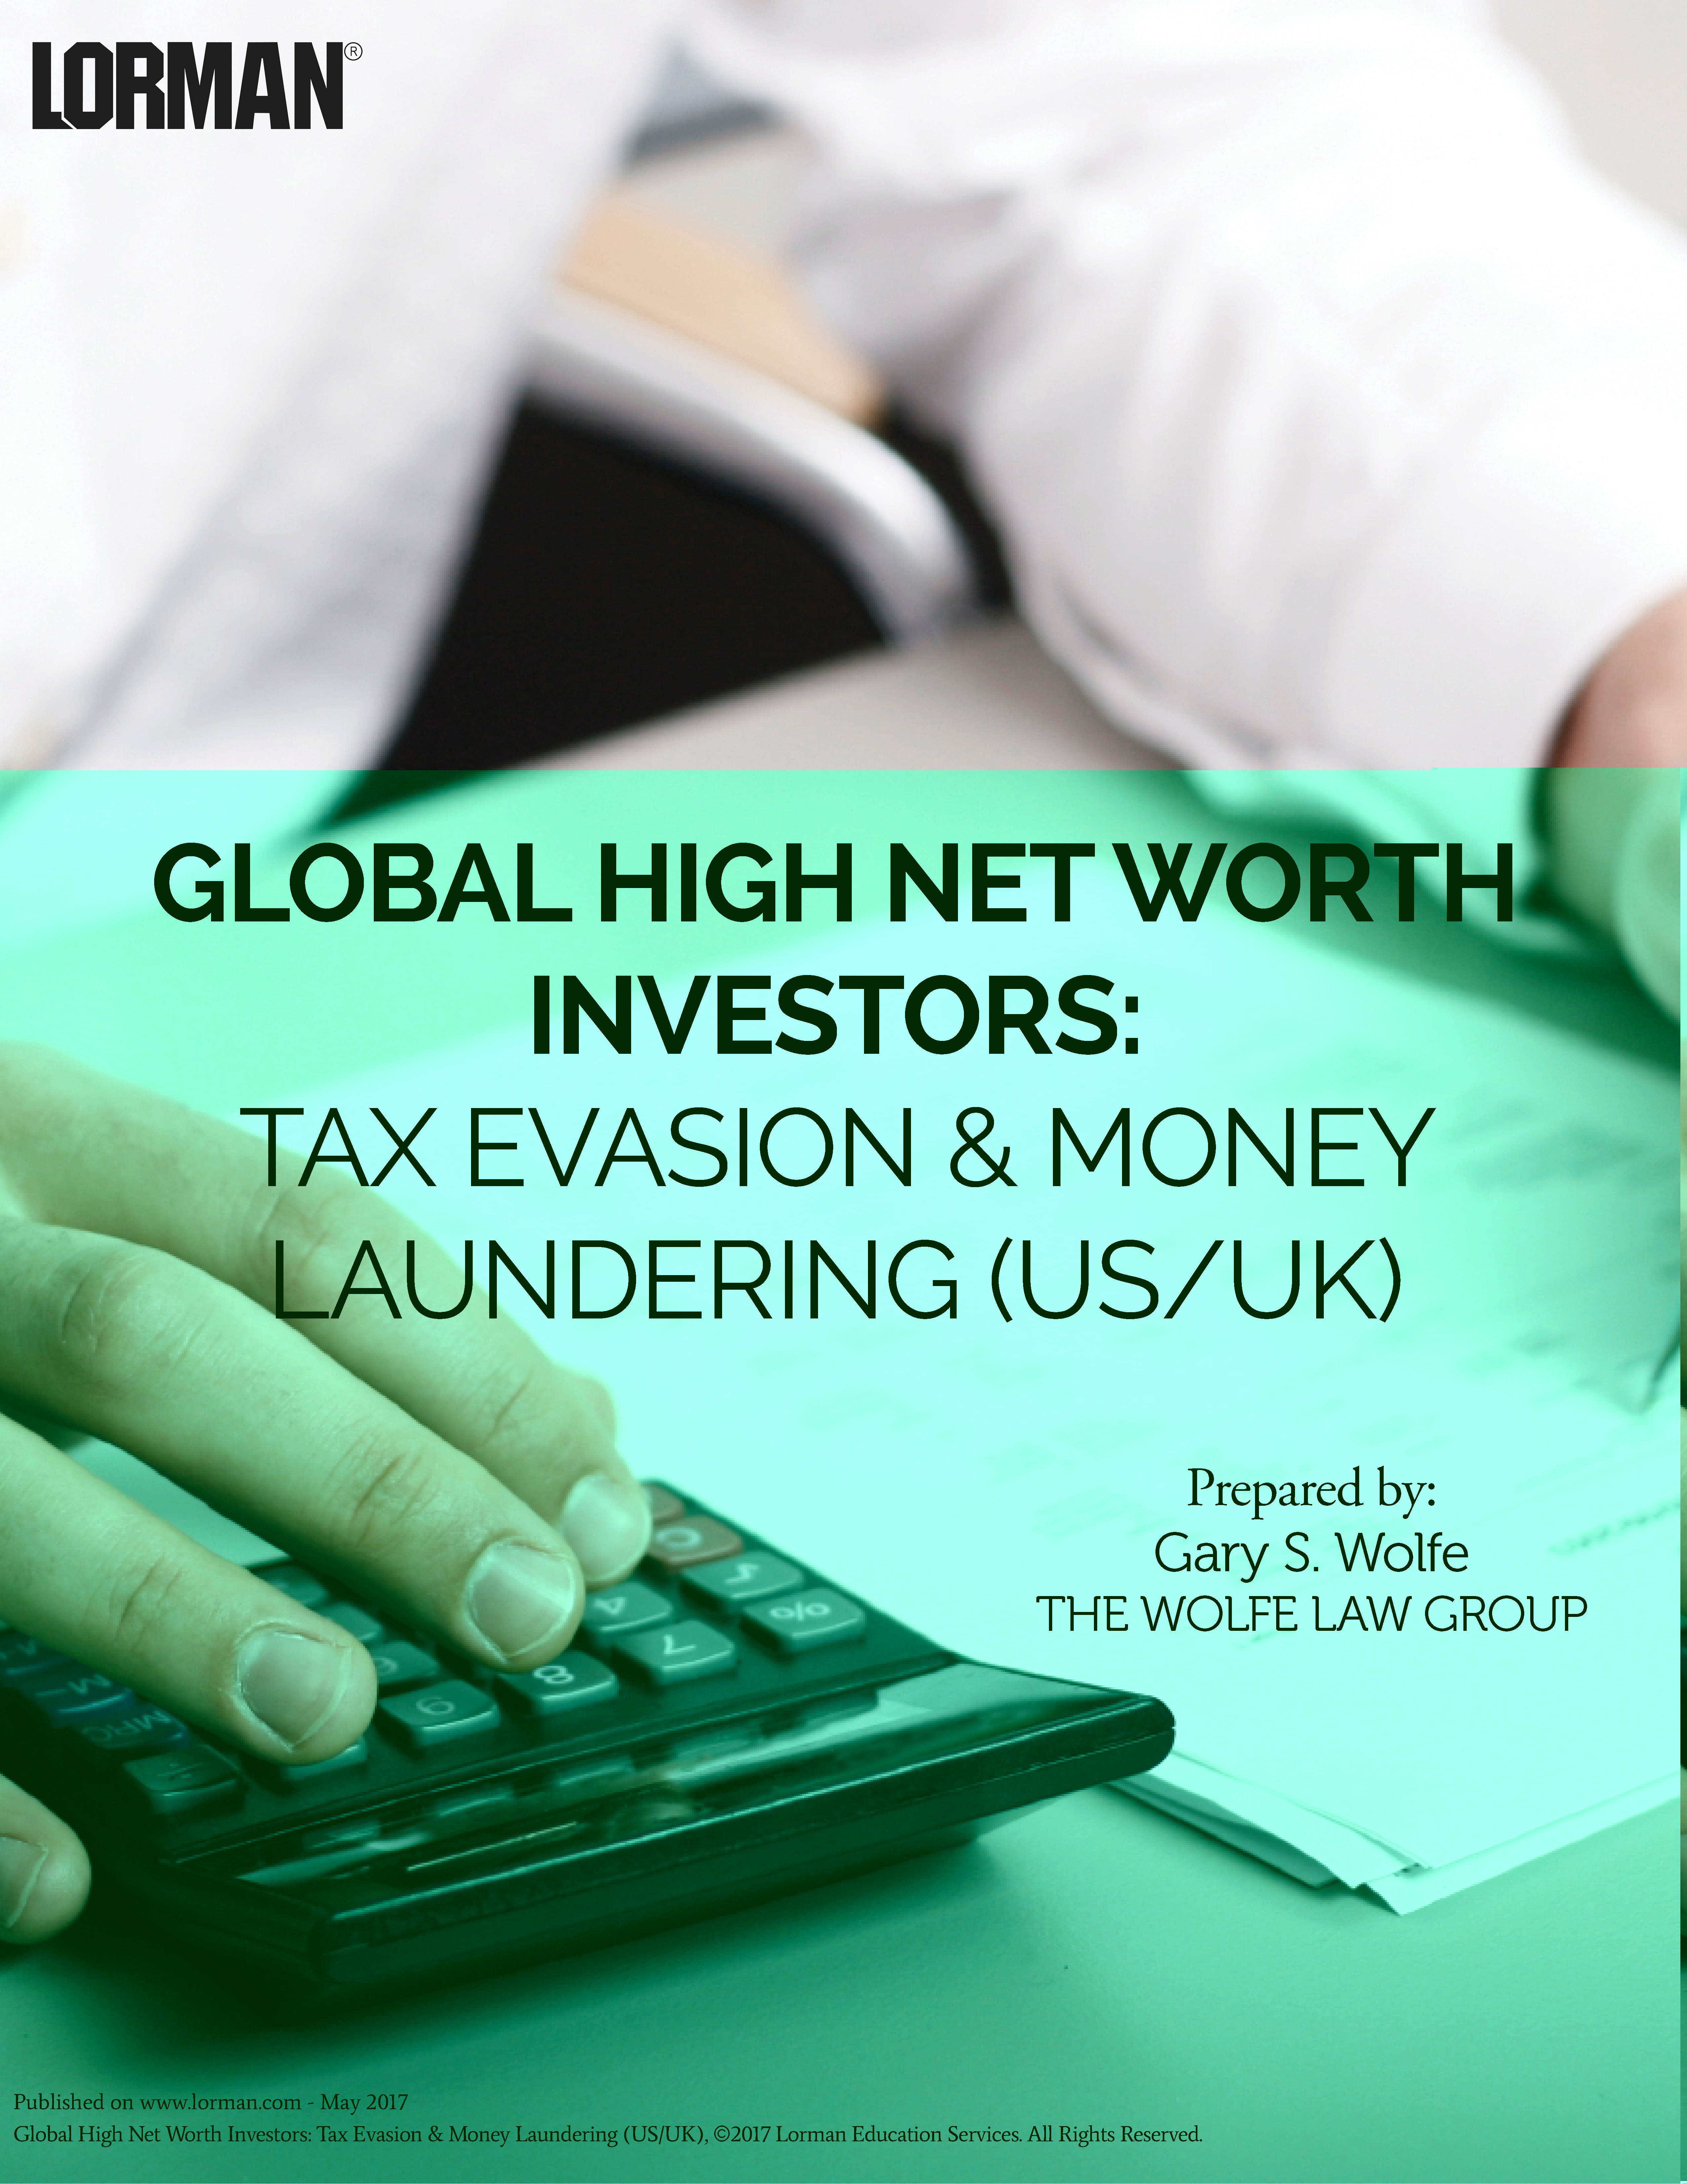 Global High Net Worth Investors: Tax Evasion & Money Laundering (US/UK)